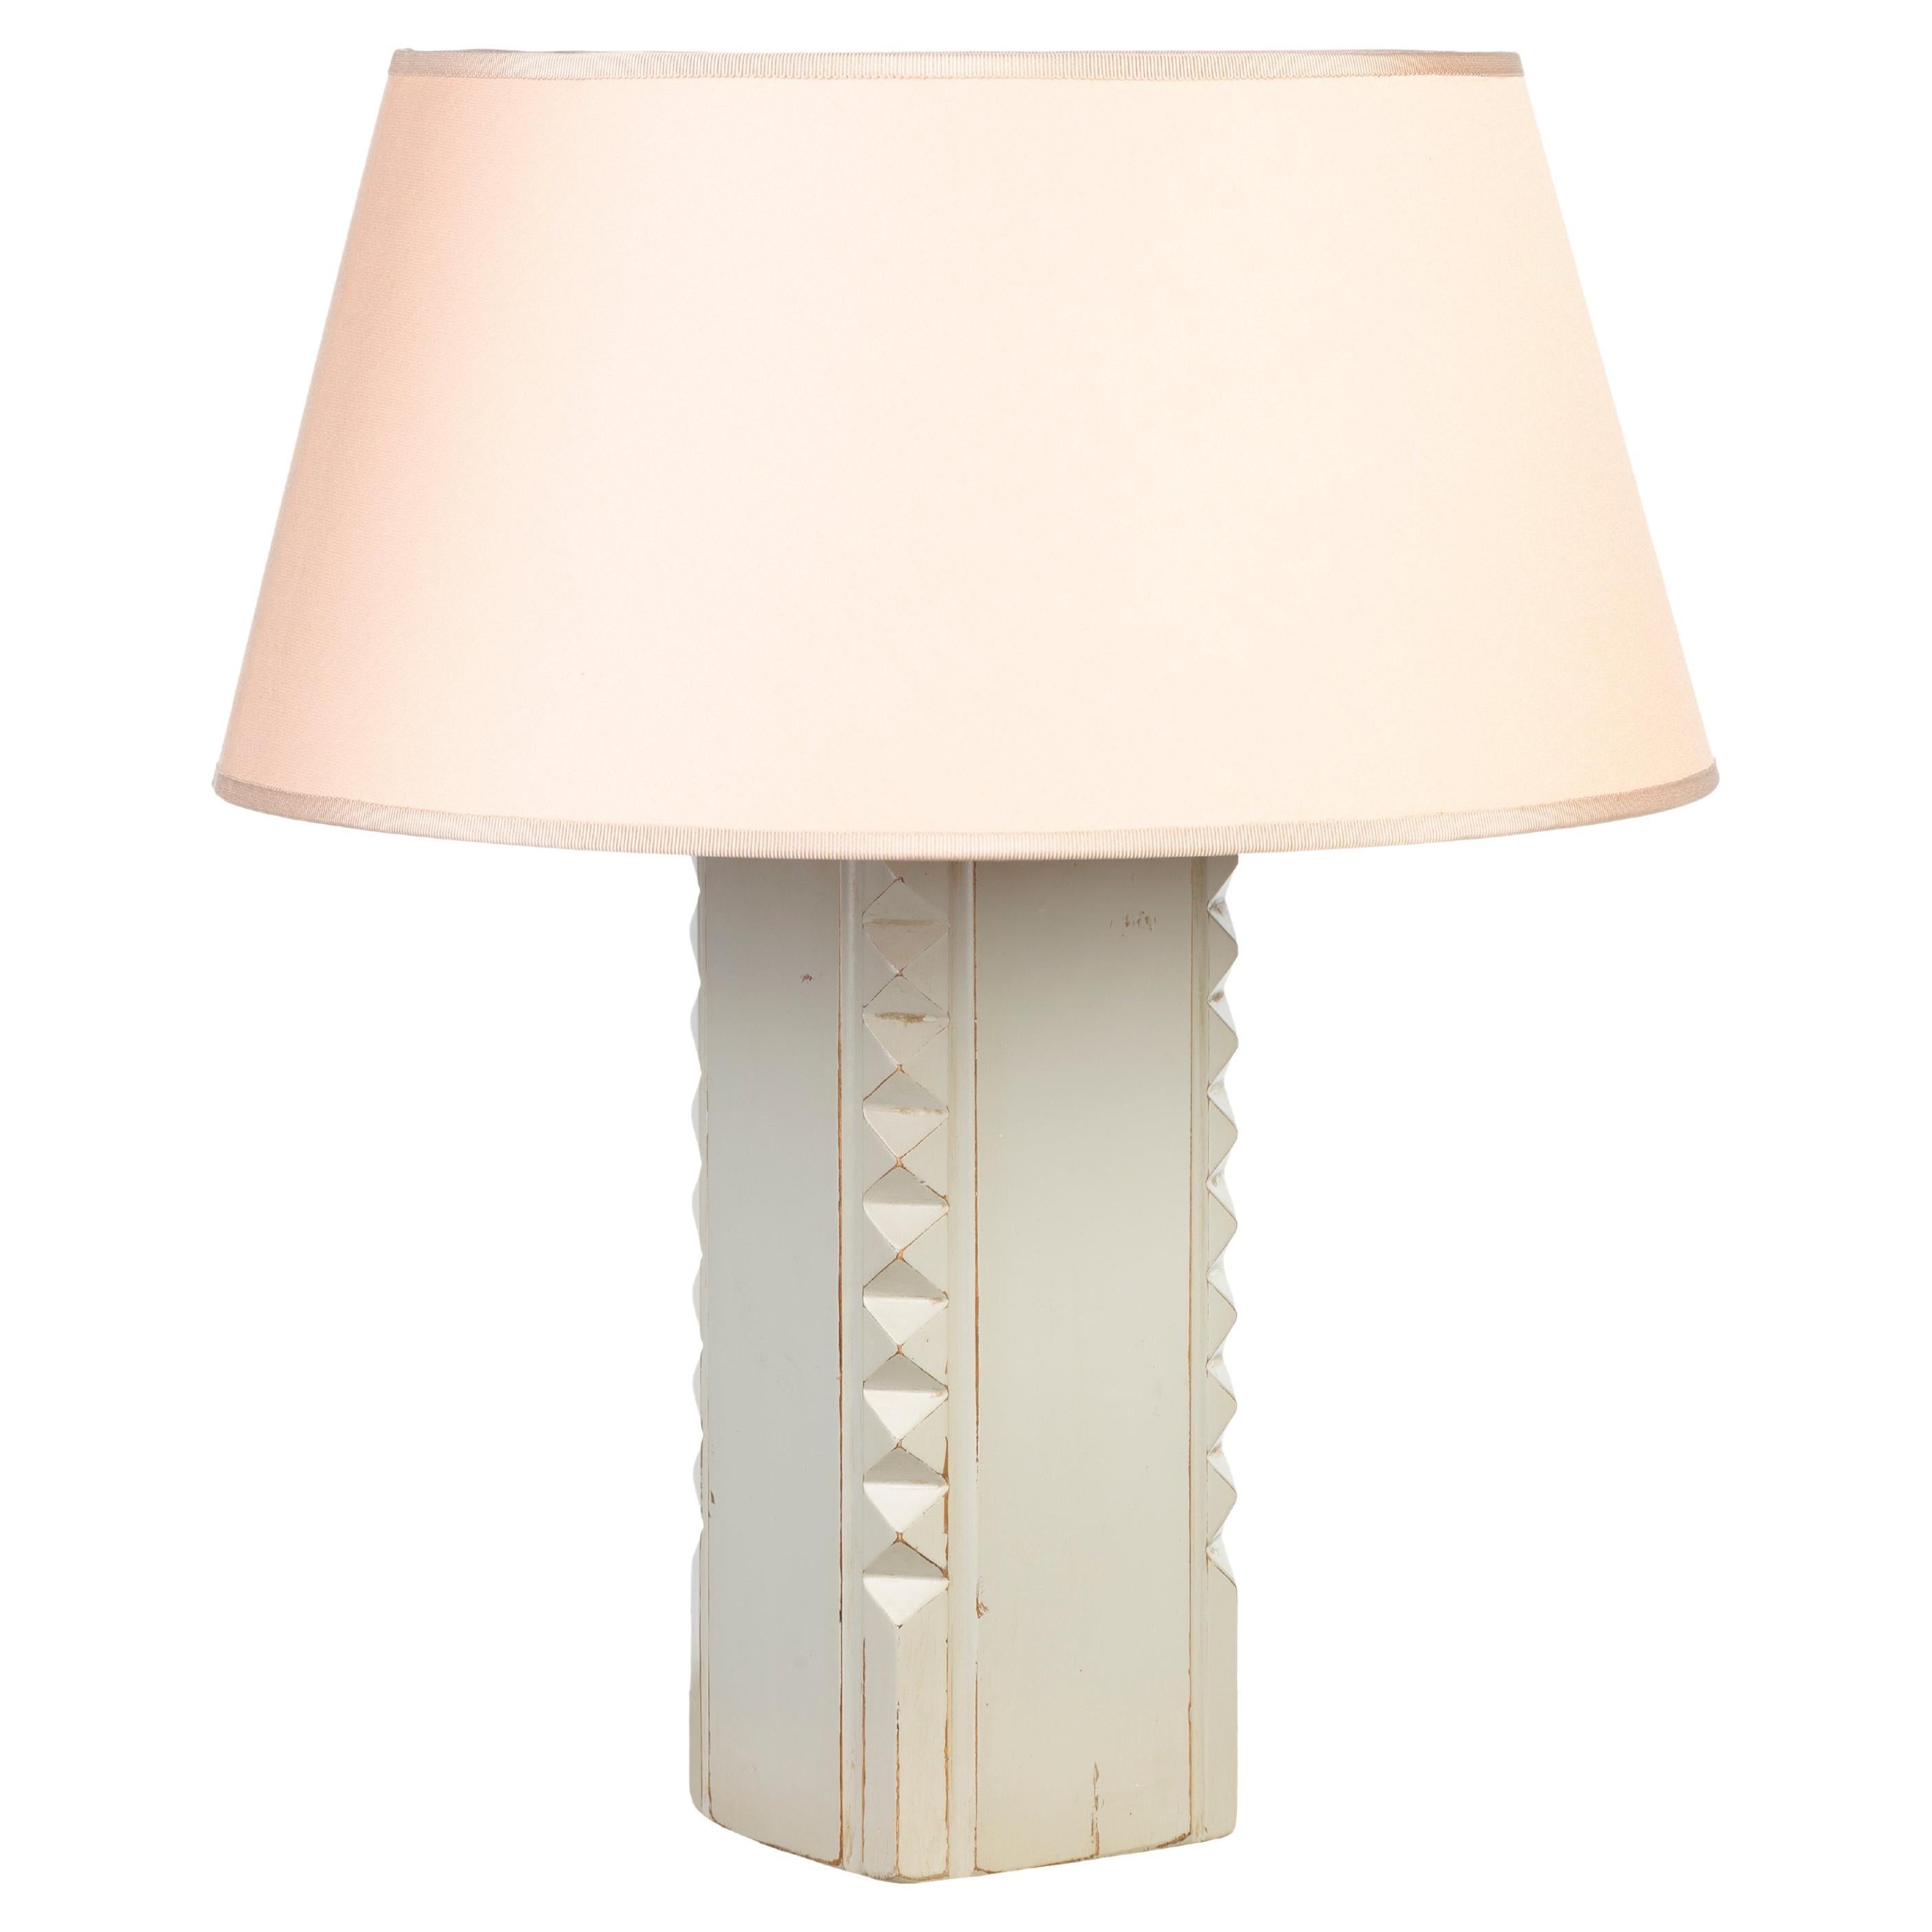 Moissonnier Table Lamp, model Rive Gauche by Pierre Gonalons